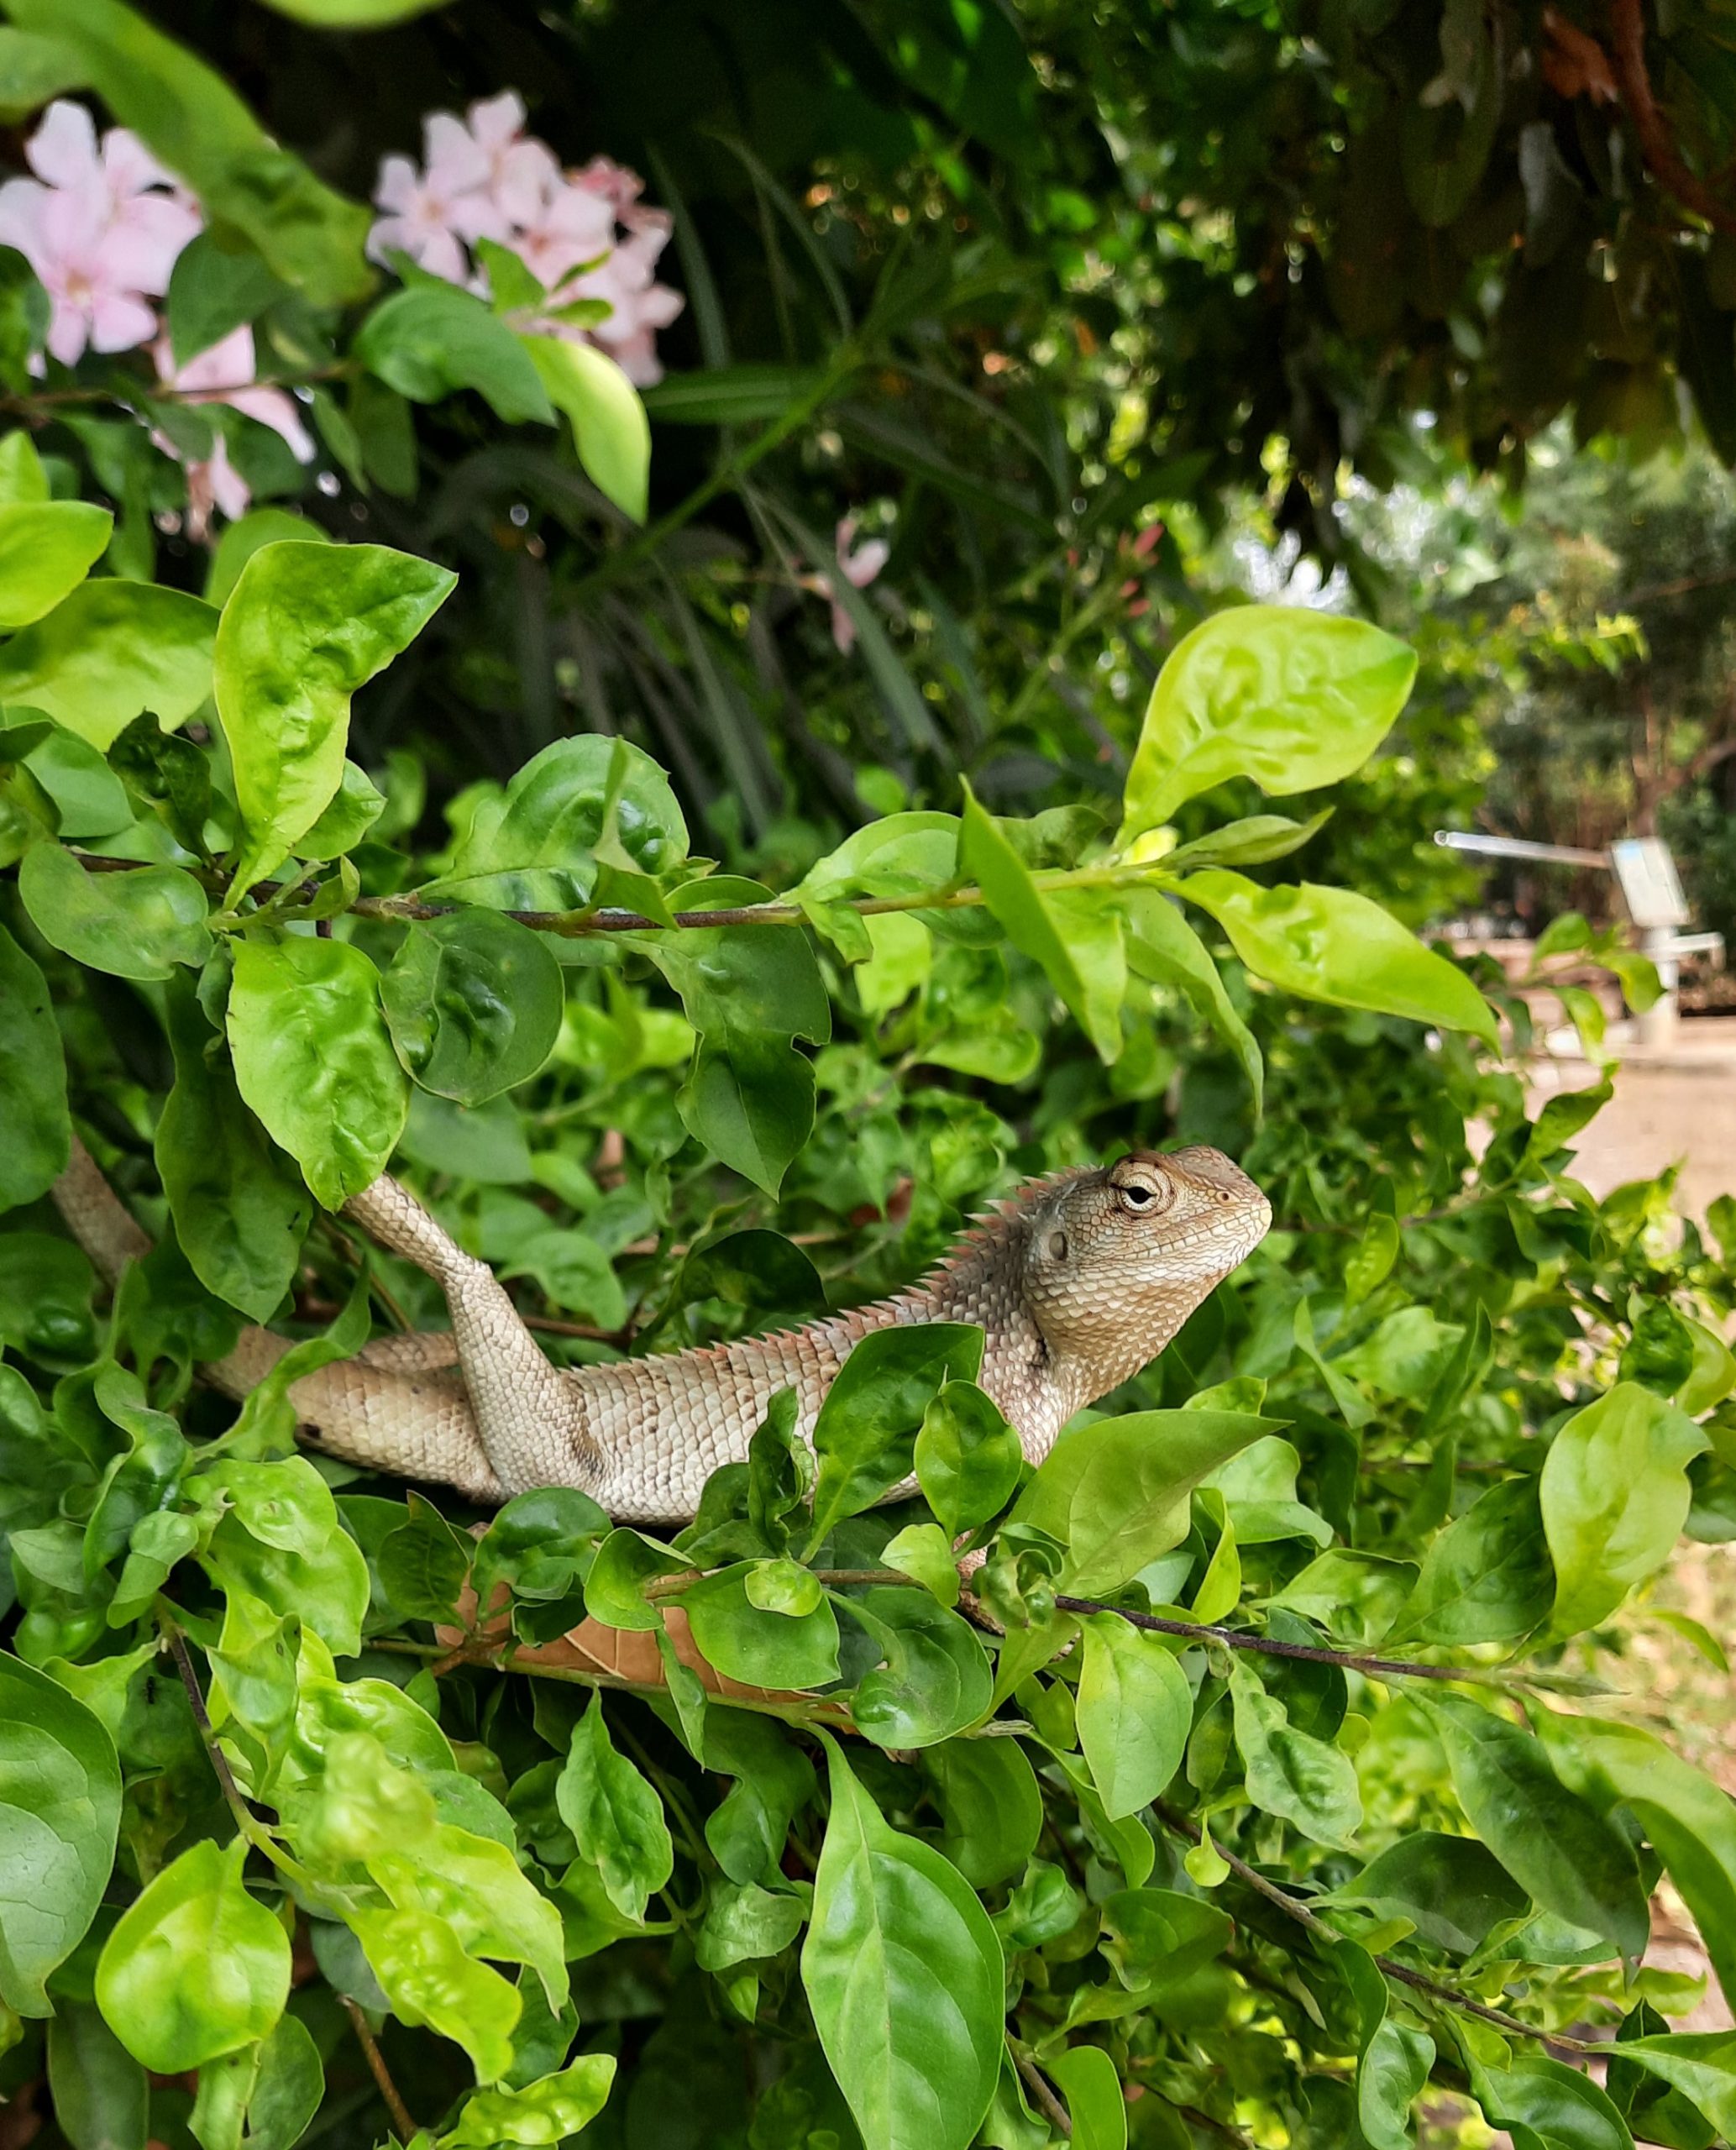 Garden lizard on the plant